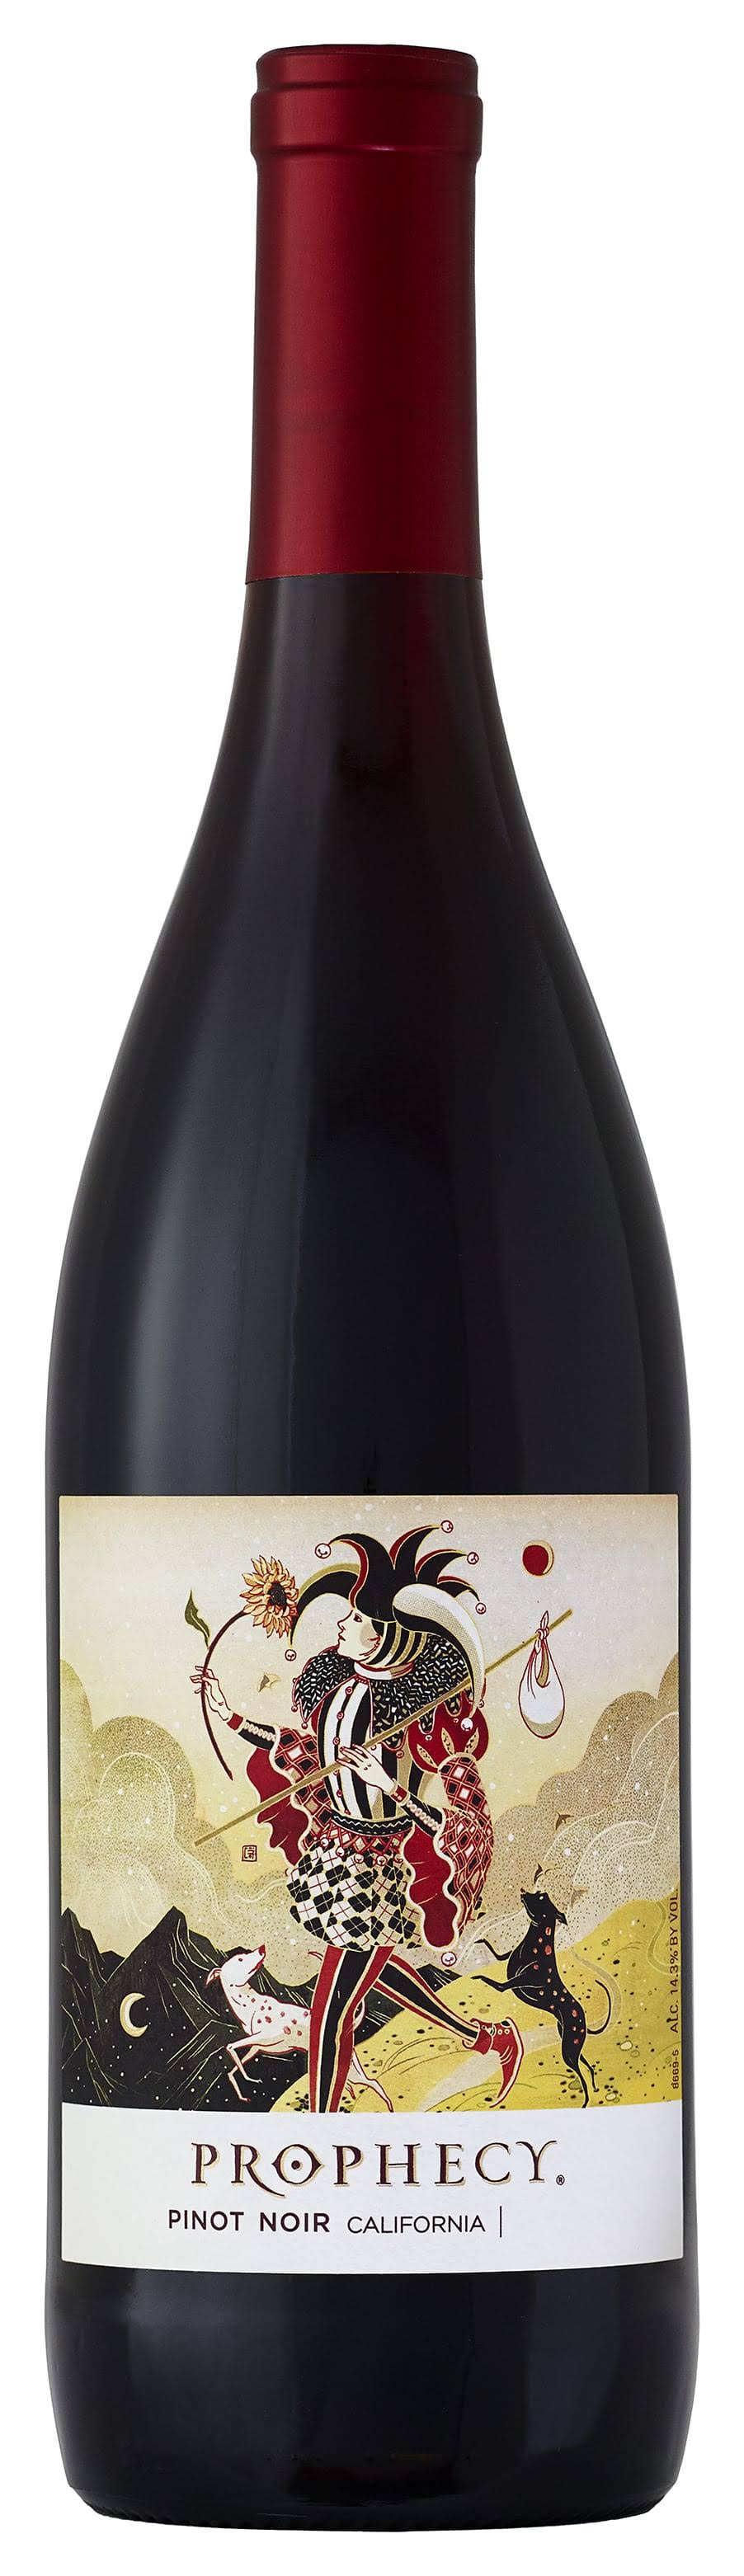 Prophecy Pinot Noir, California, 2013 - 750 ml